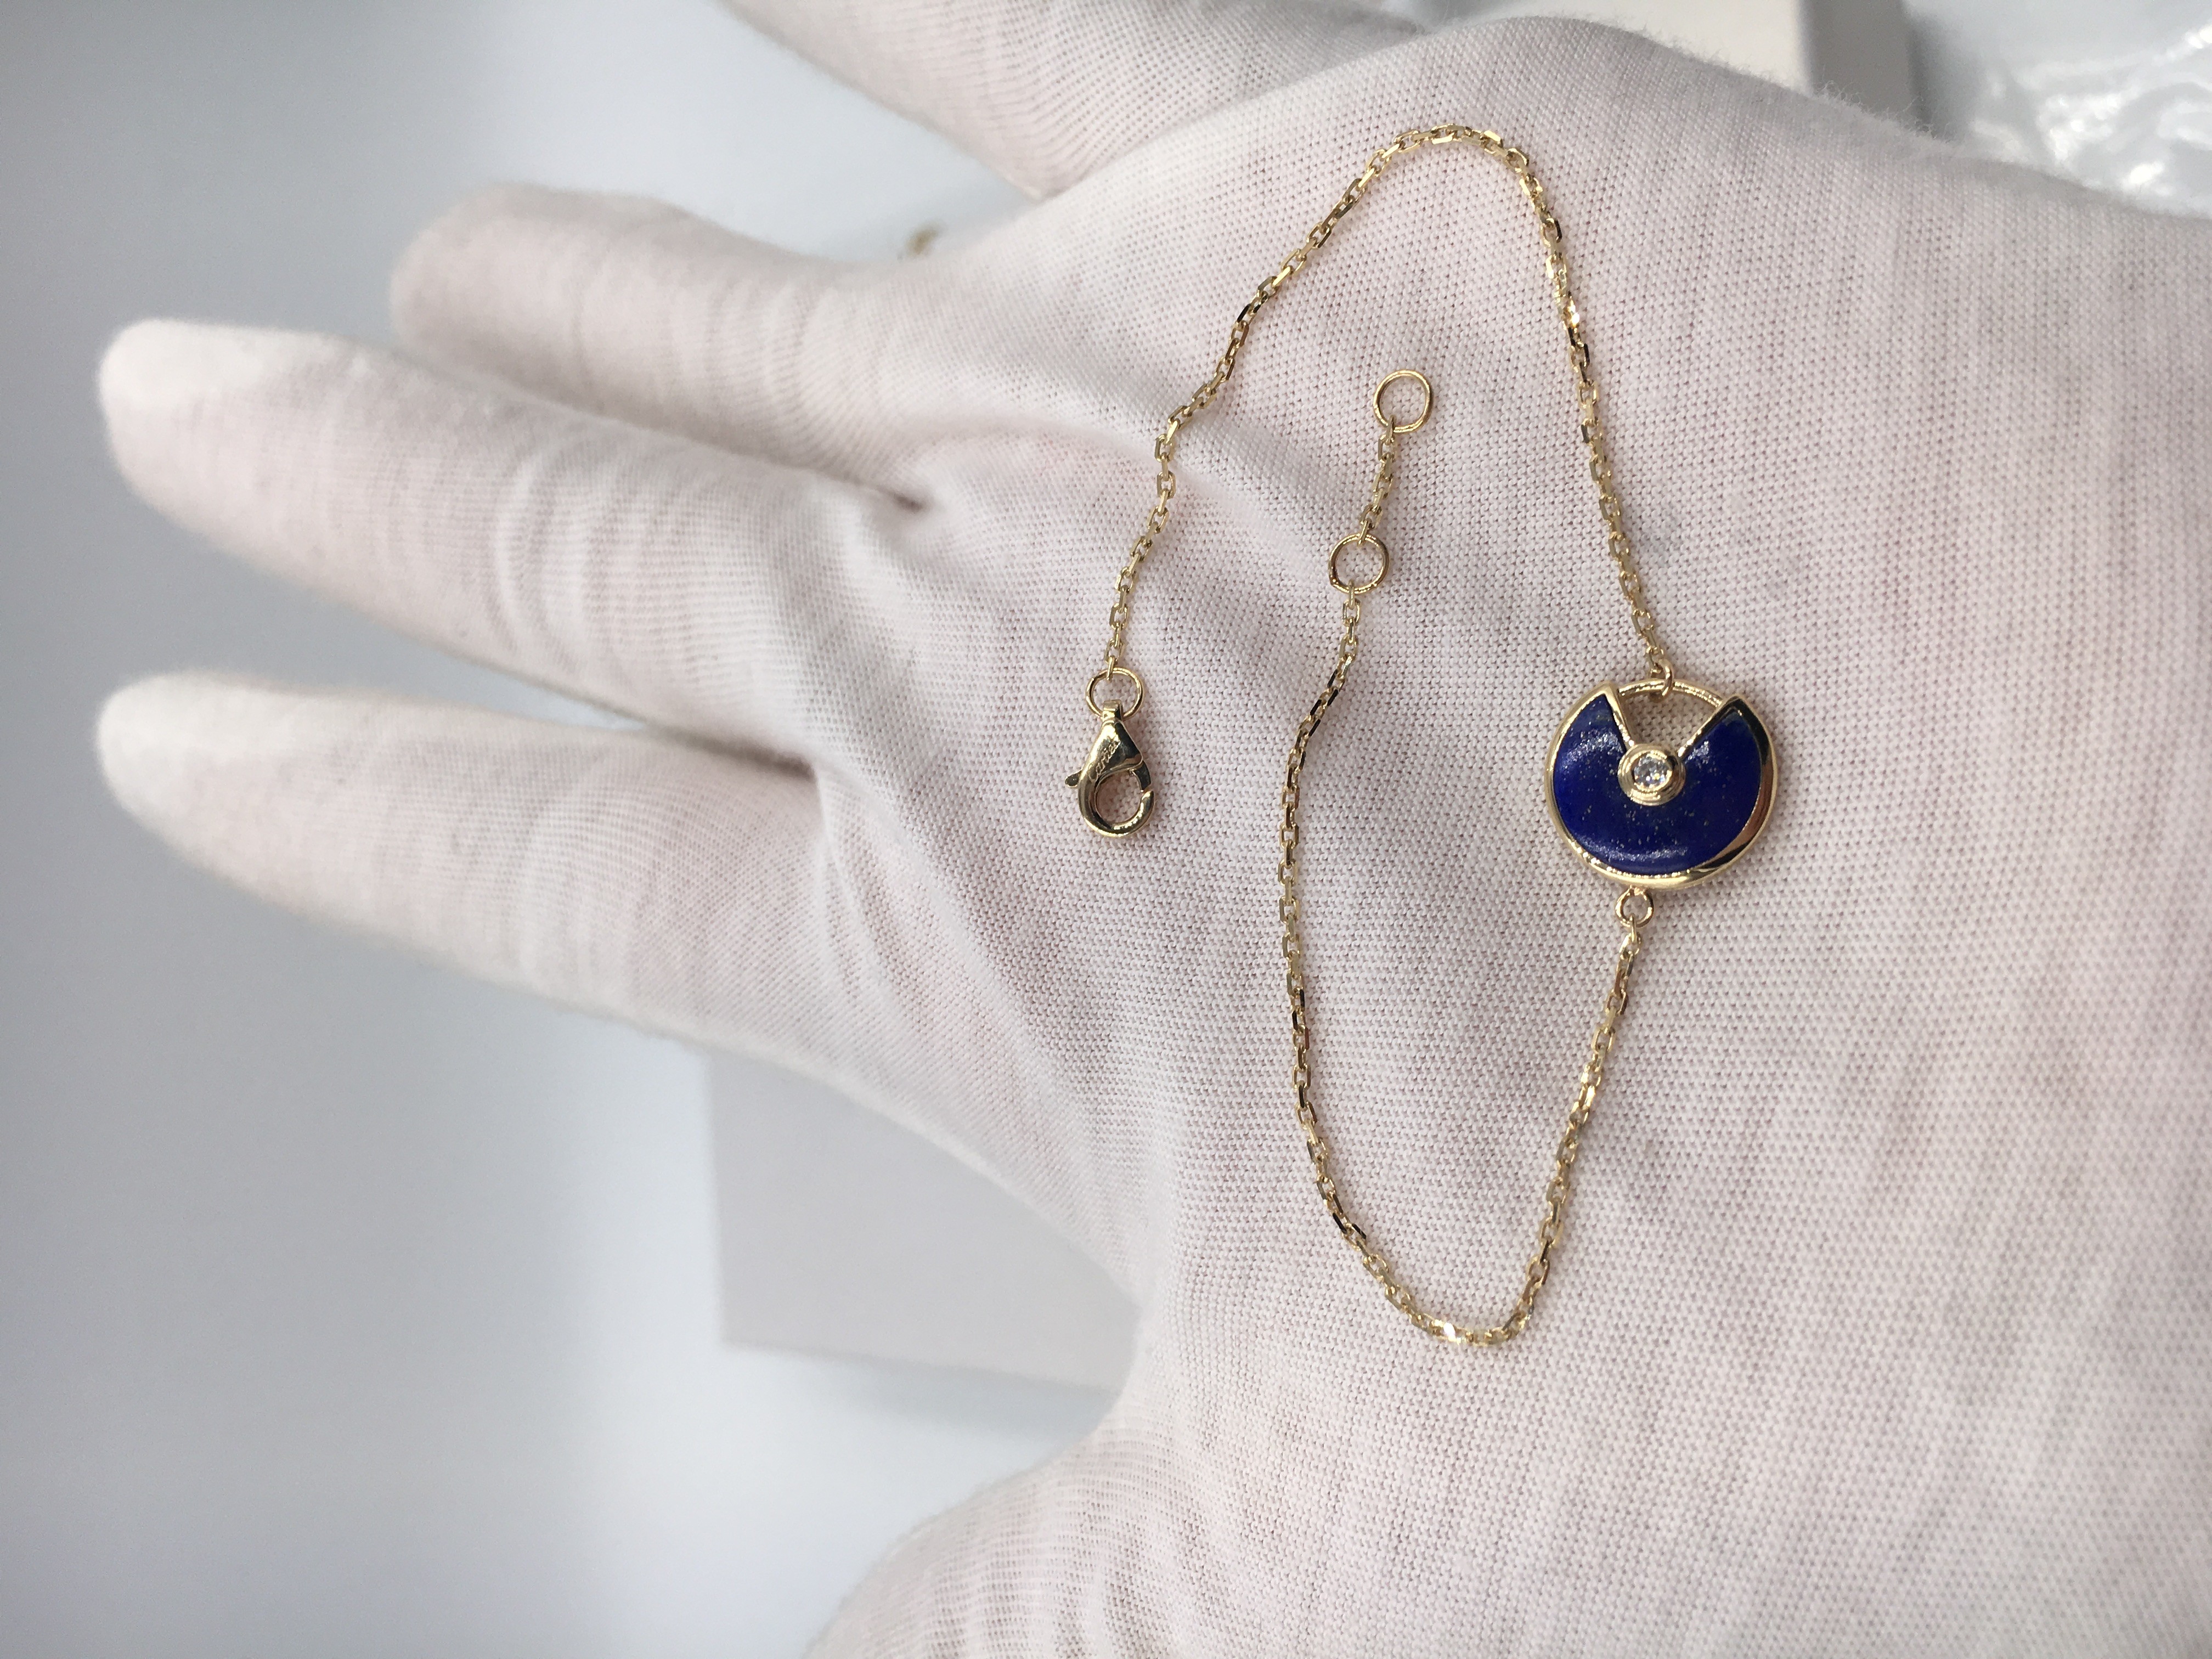 Wholesale Enchanting Colorful Lapis Lazuli 18 Karat Gold Necklace 18k Karat Gold Chain from china suppliers